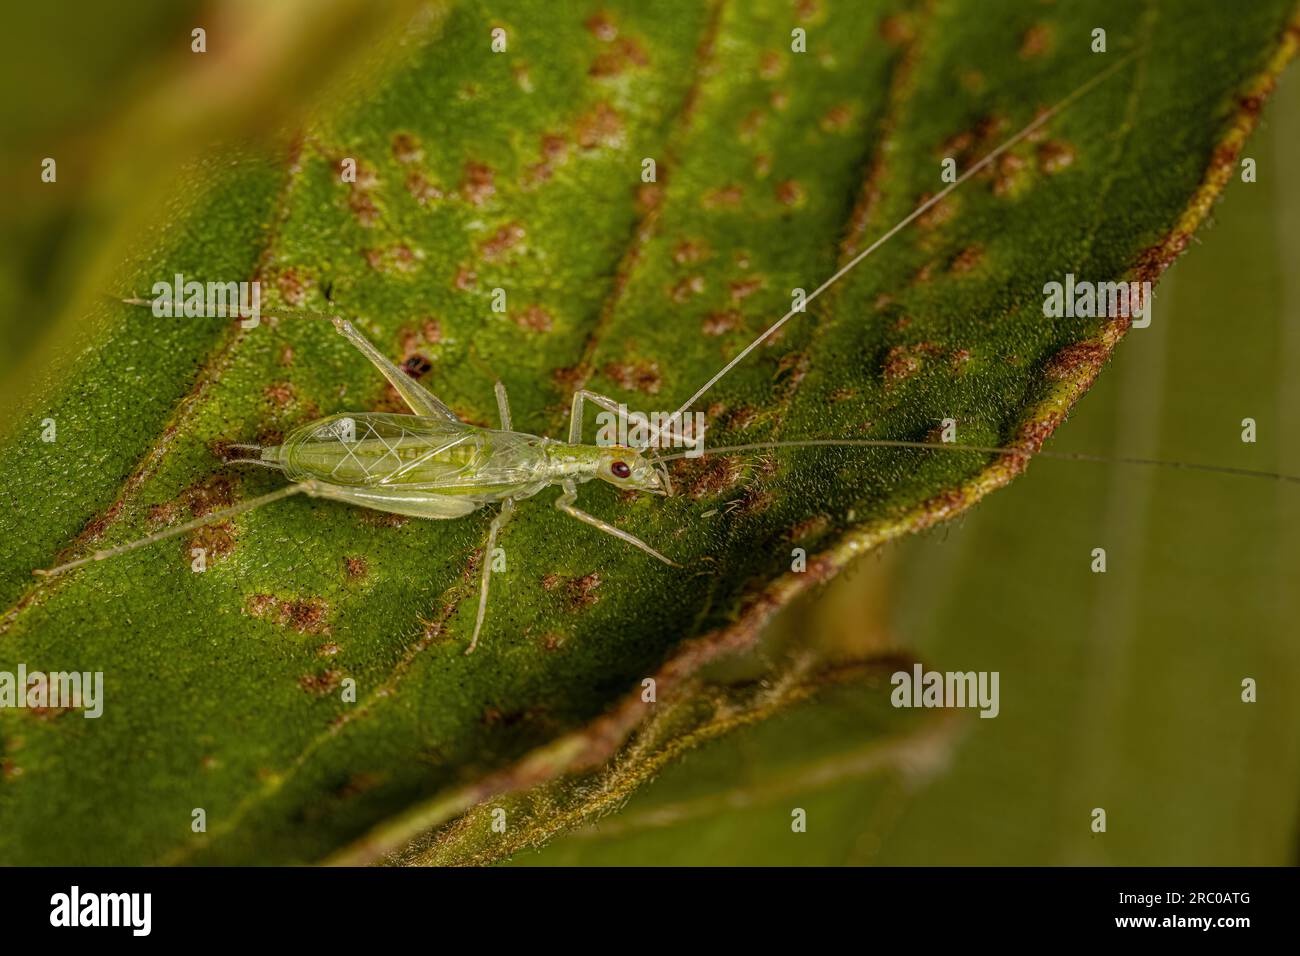 Common Tree Cricket Insect of the Genus Oecanthus Stock Photo